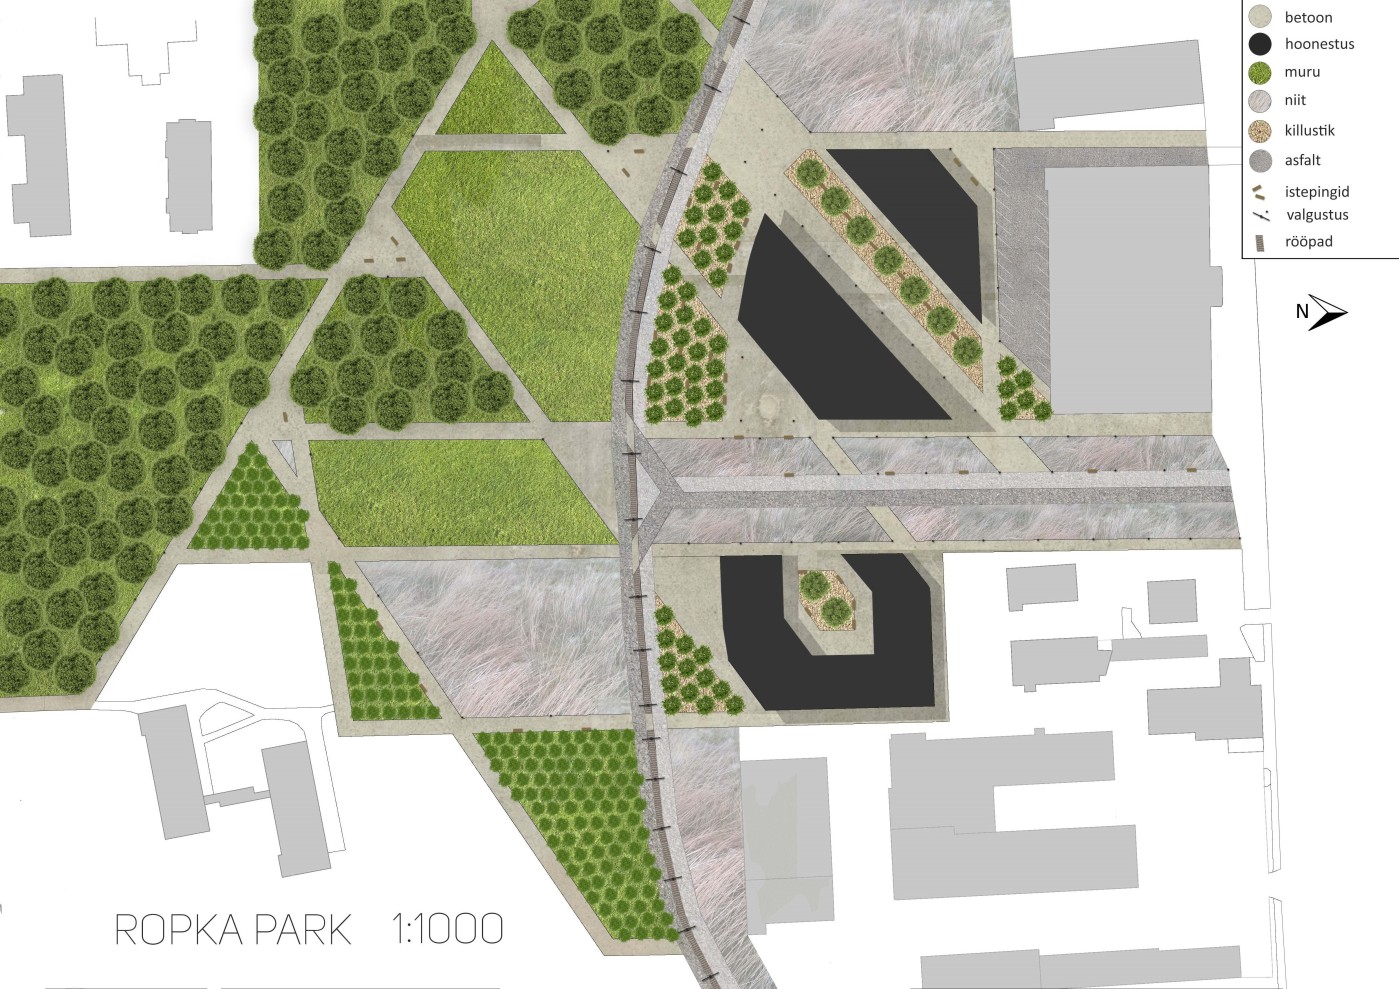 Ropka park redesign